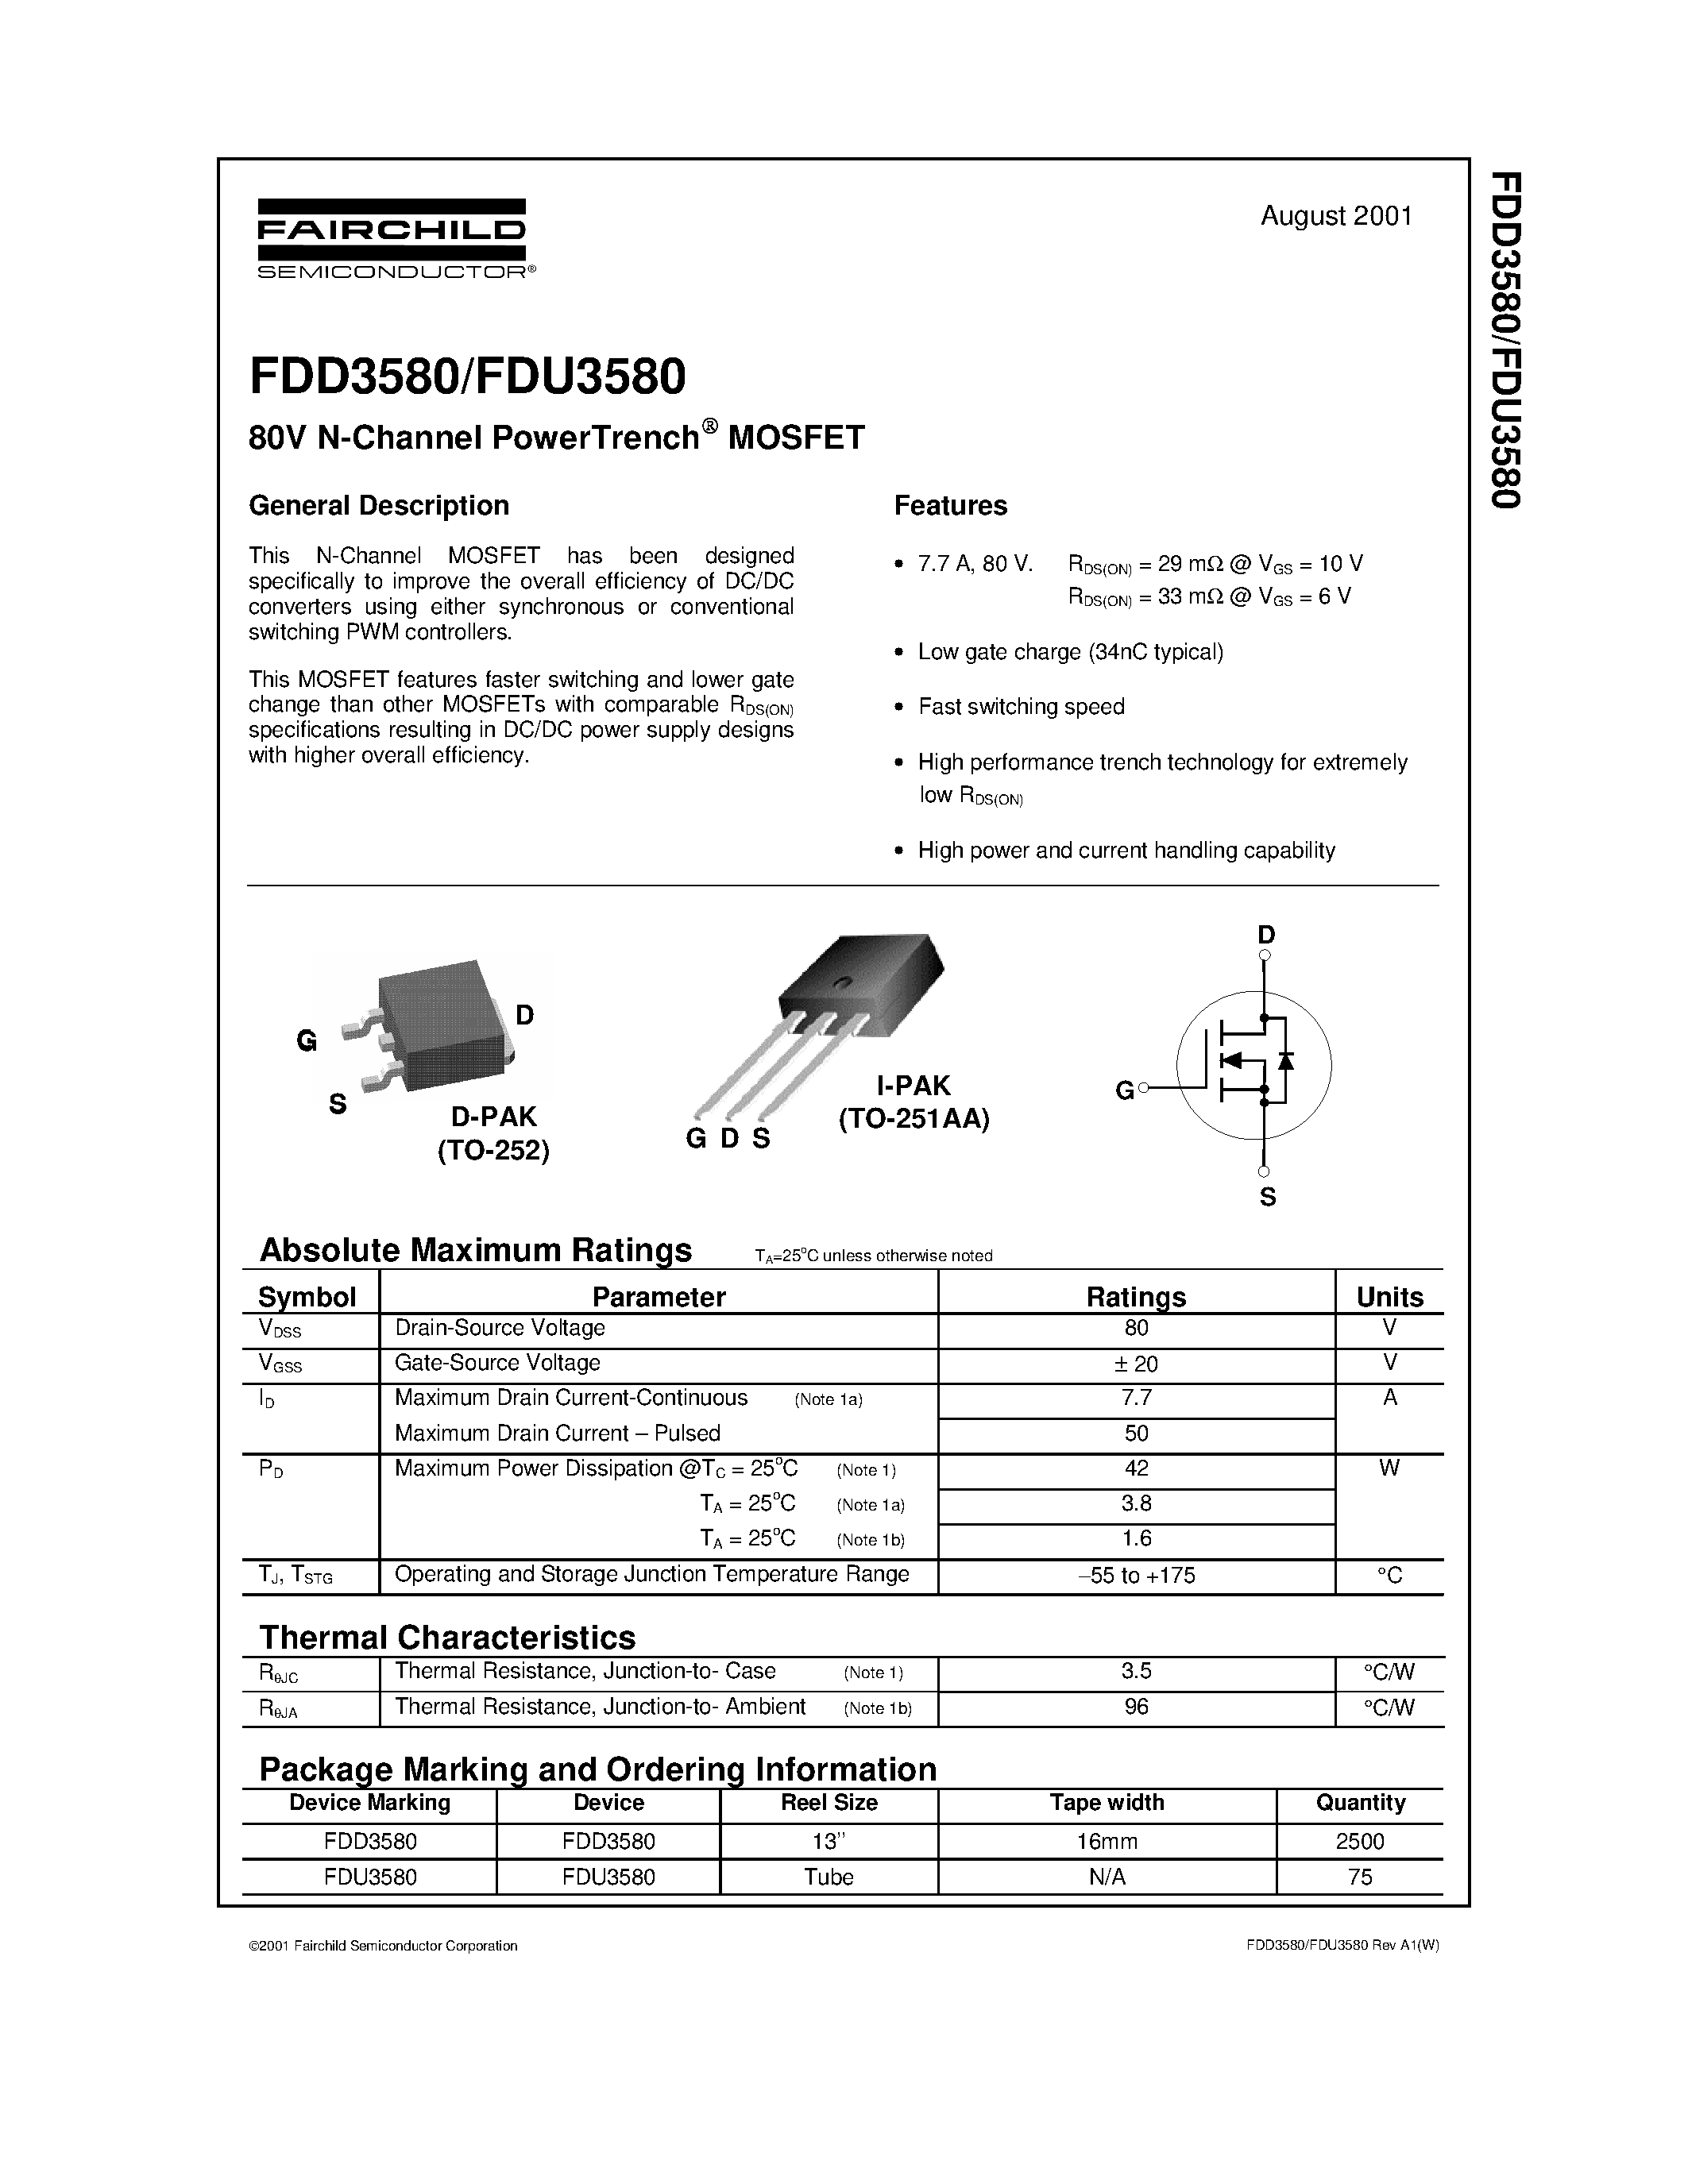 Даташит FDD3580 - 80V N-Channel PowerTrench MOSFET страница 1